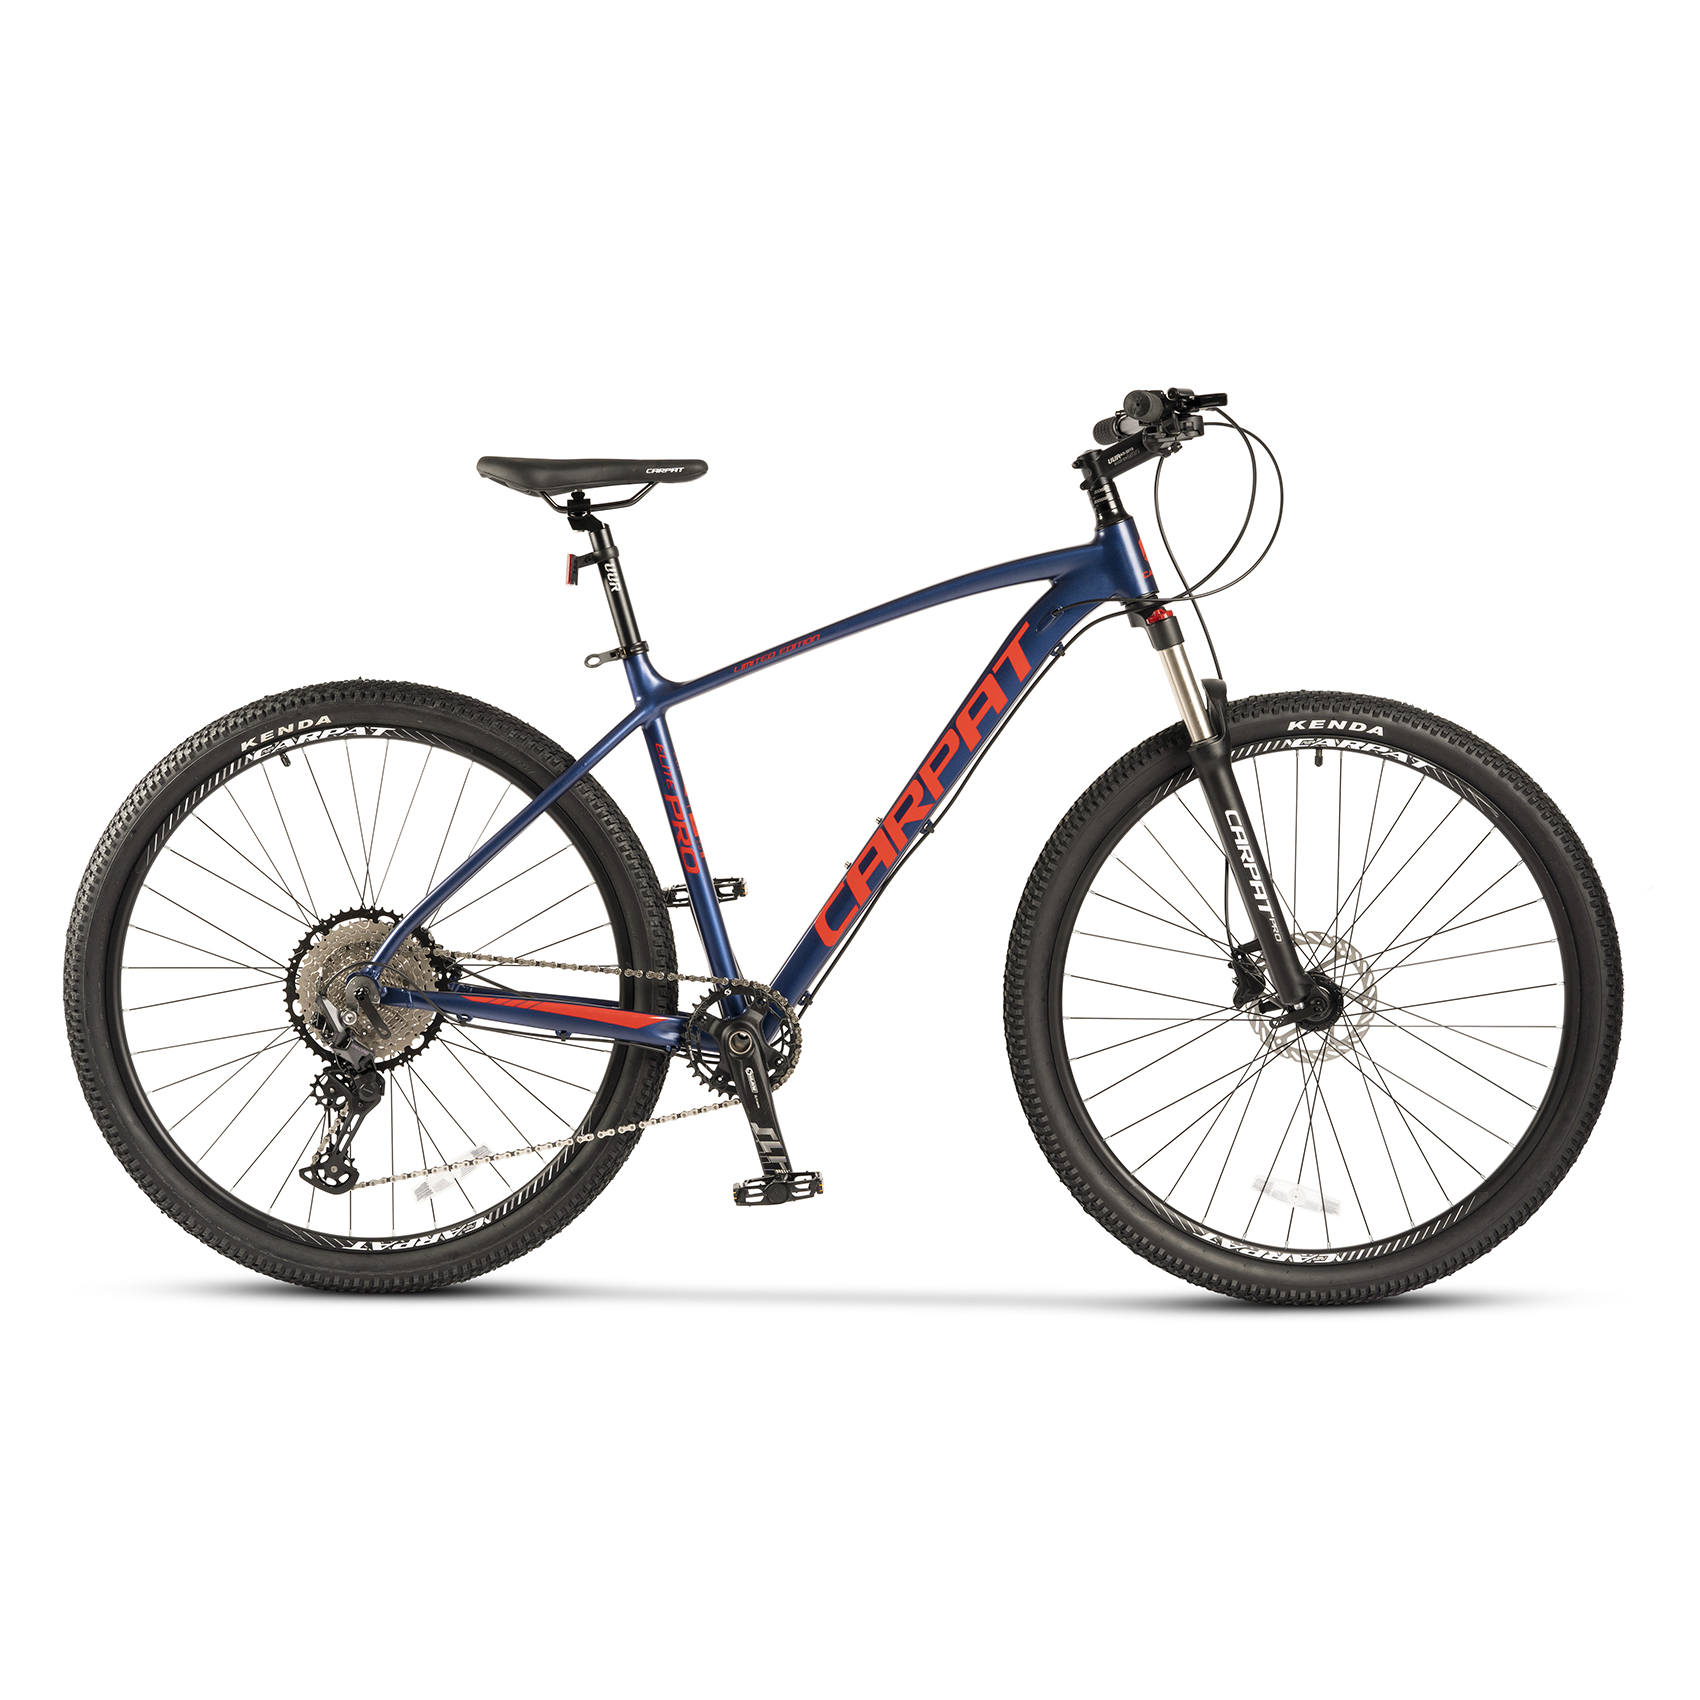 PROMO BICICLETE - Bicicleta MTB-HT Carpat PRO C29212H LIMITED EDITION 29", Albastru/Rosu, https:carpatsport.ro